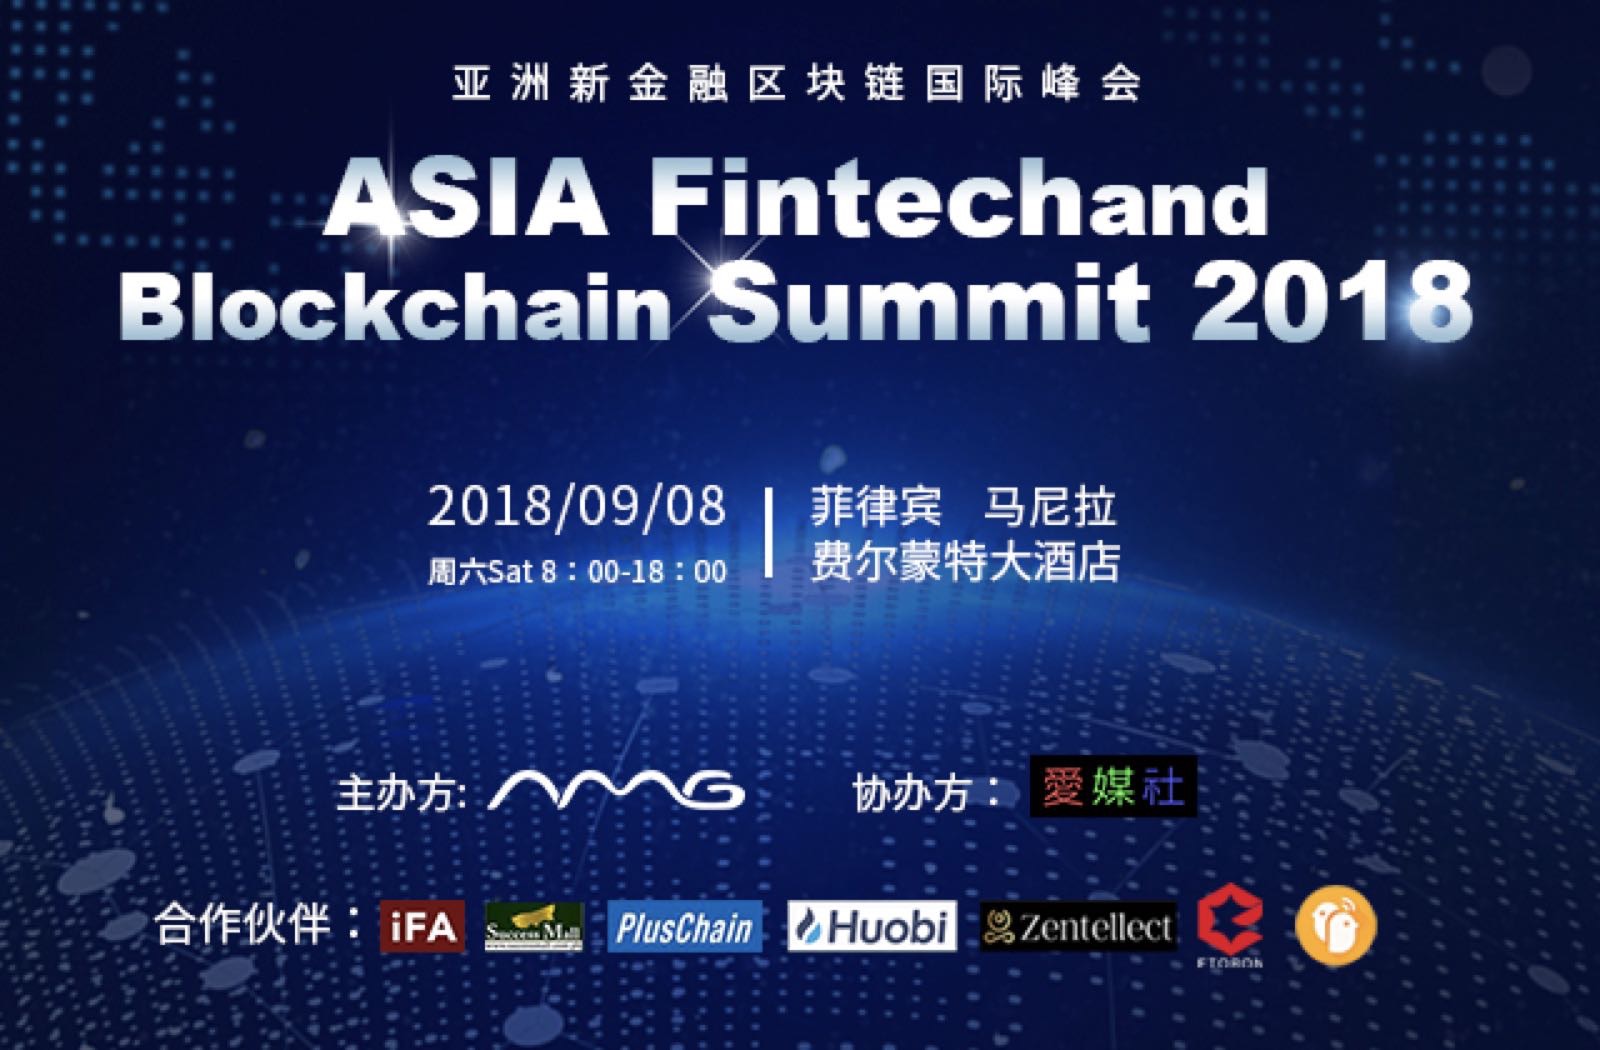 ASIA Fintech and Blockchain Summit 2018